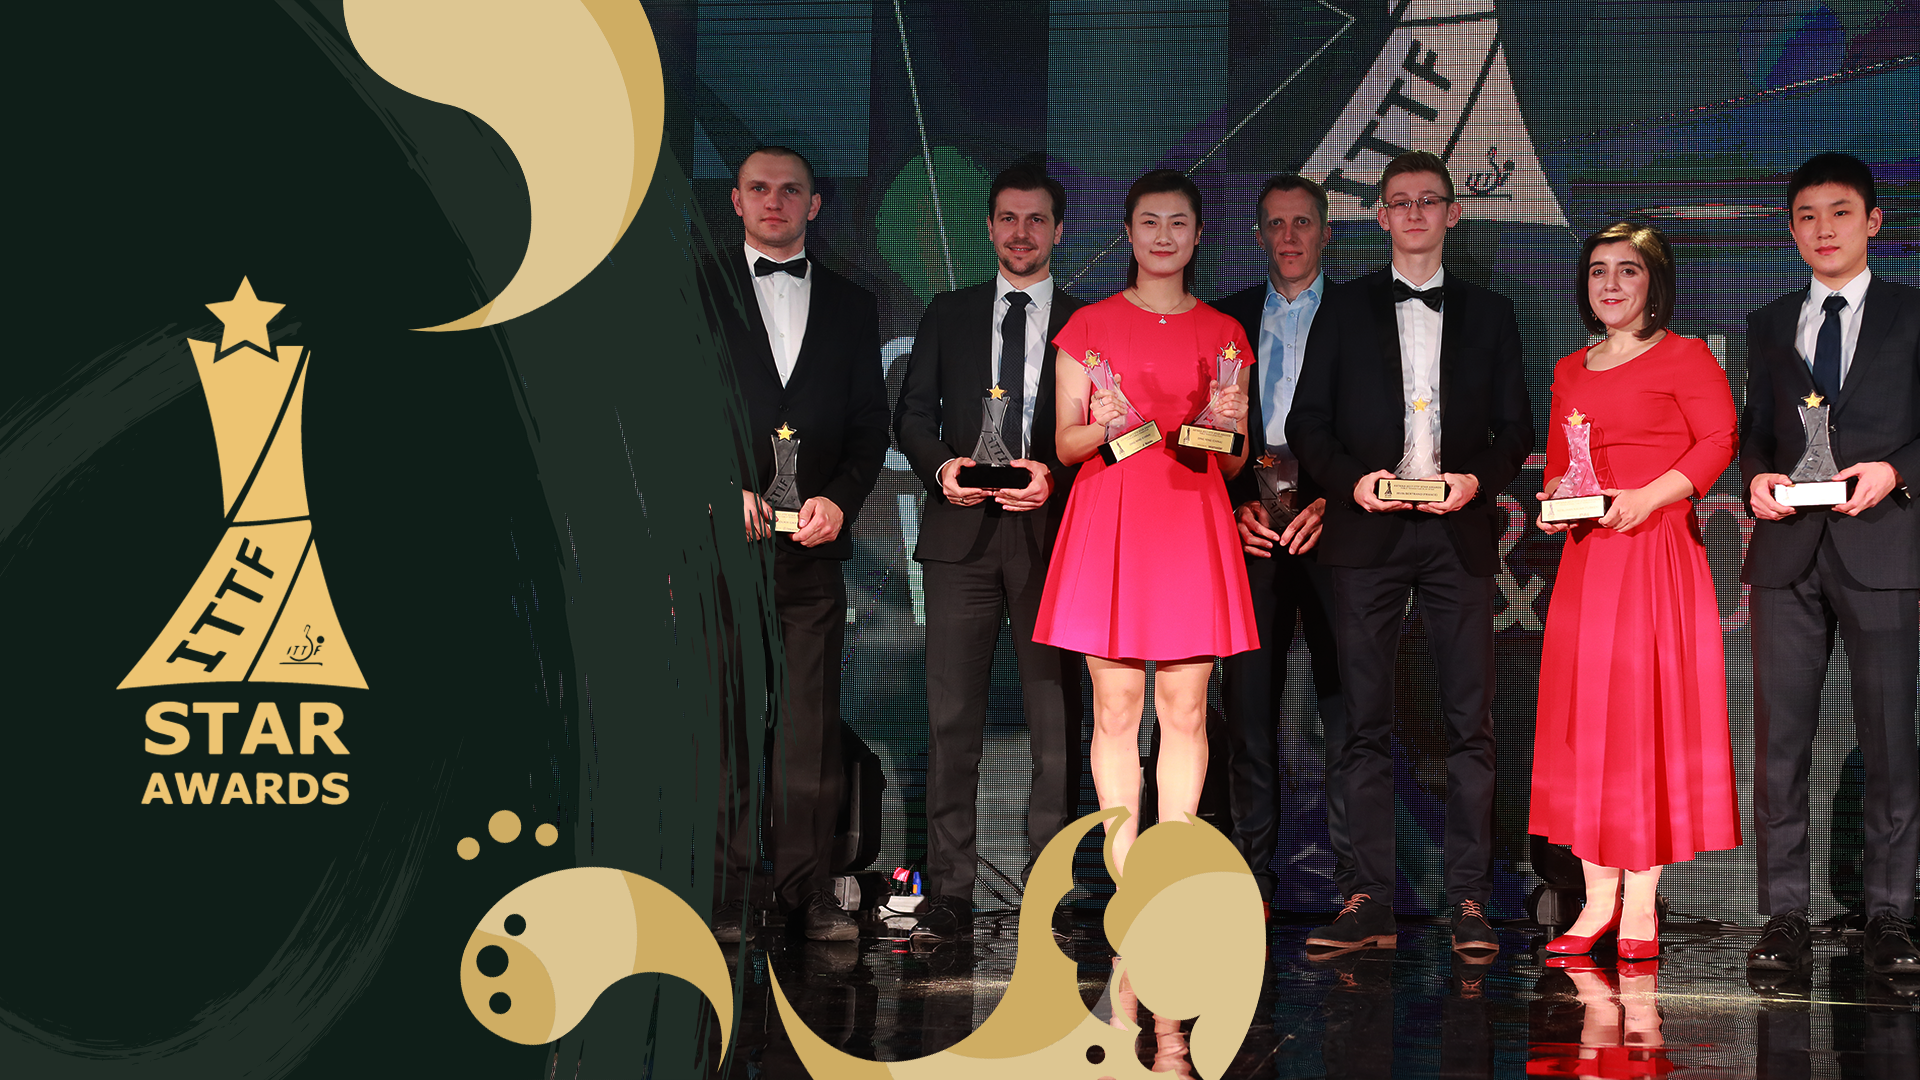 ITTF announce nominees for 2018 Star Awards